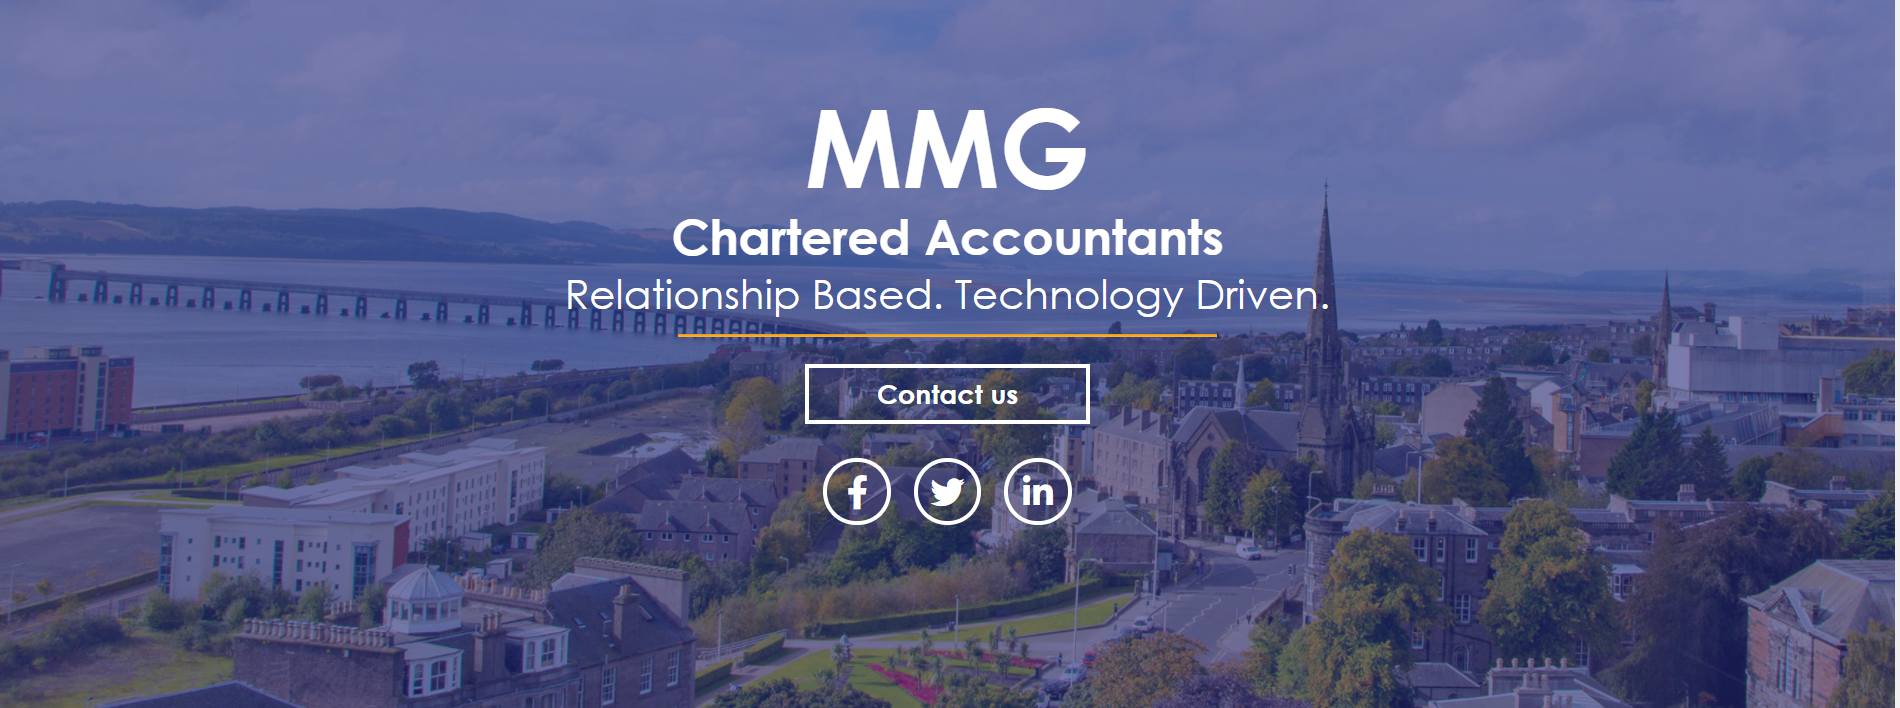 MMG Chartered Accountants